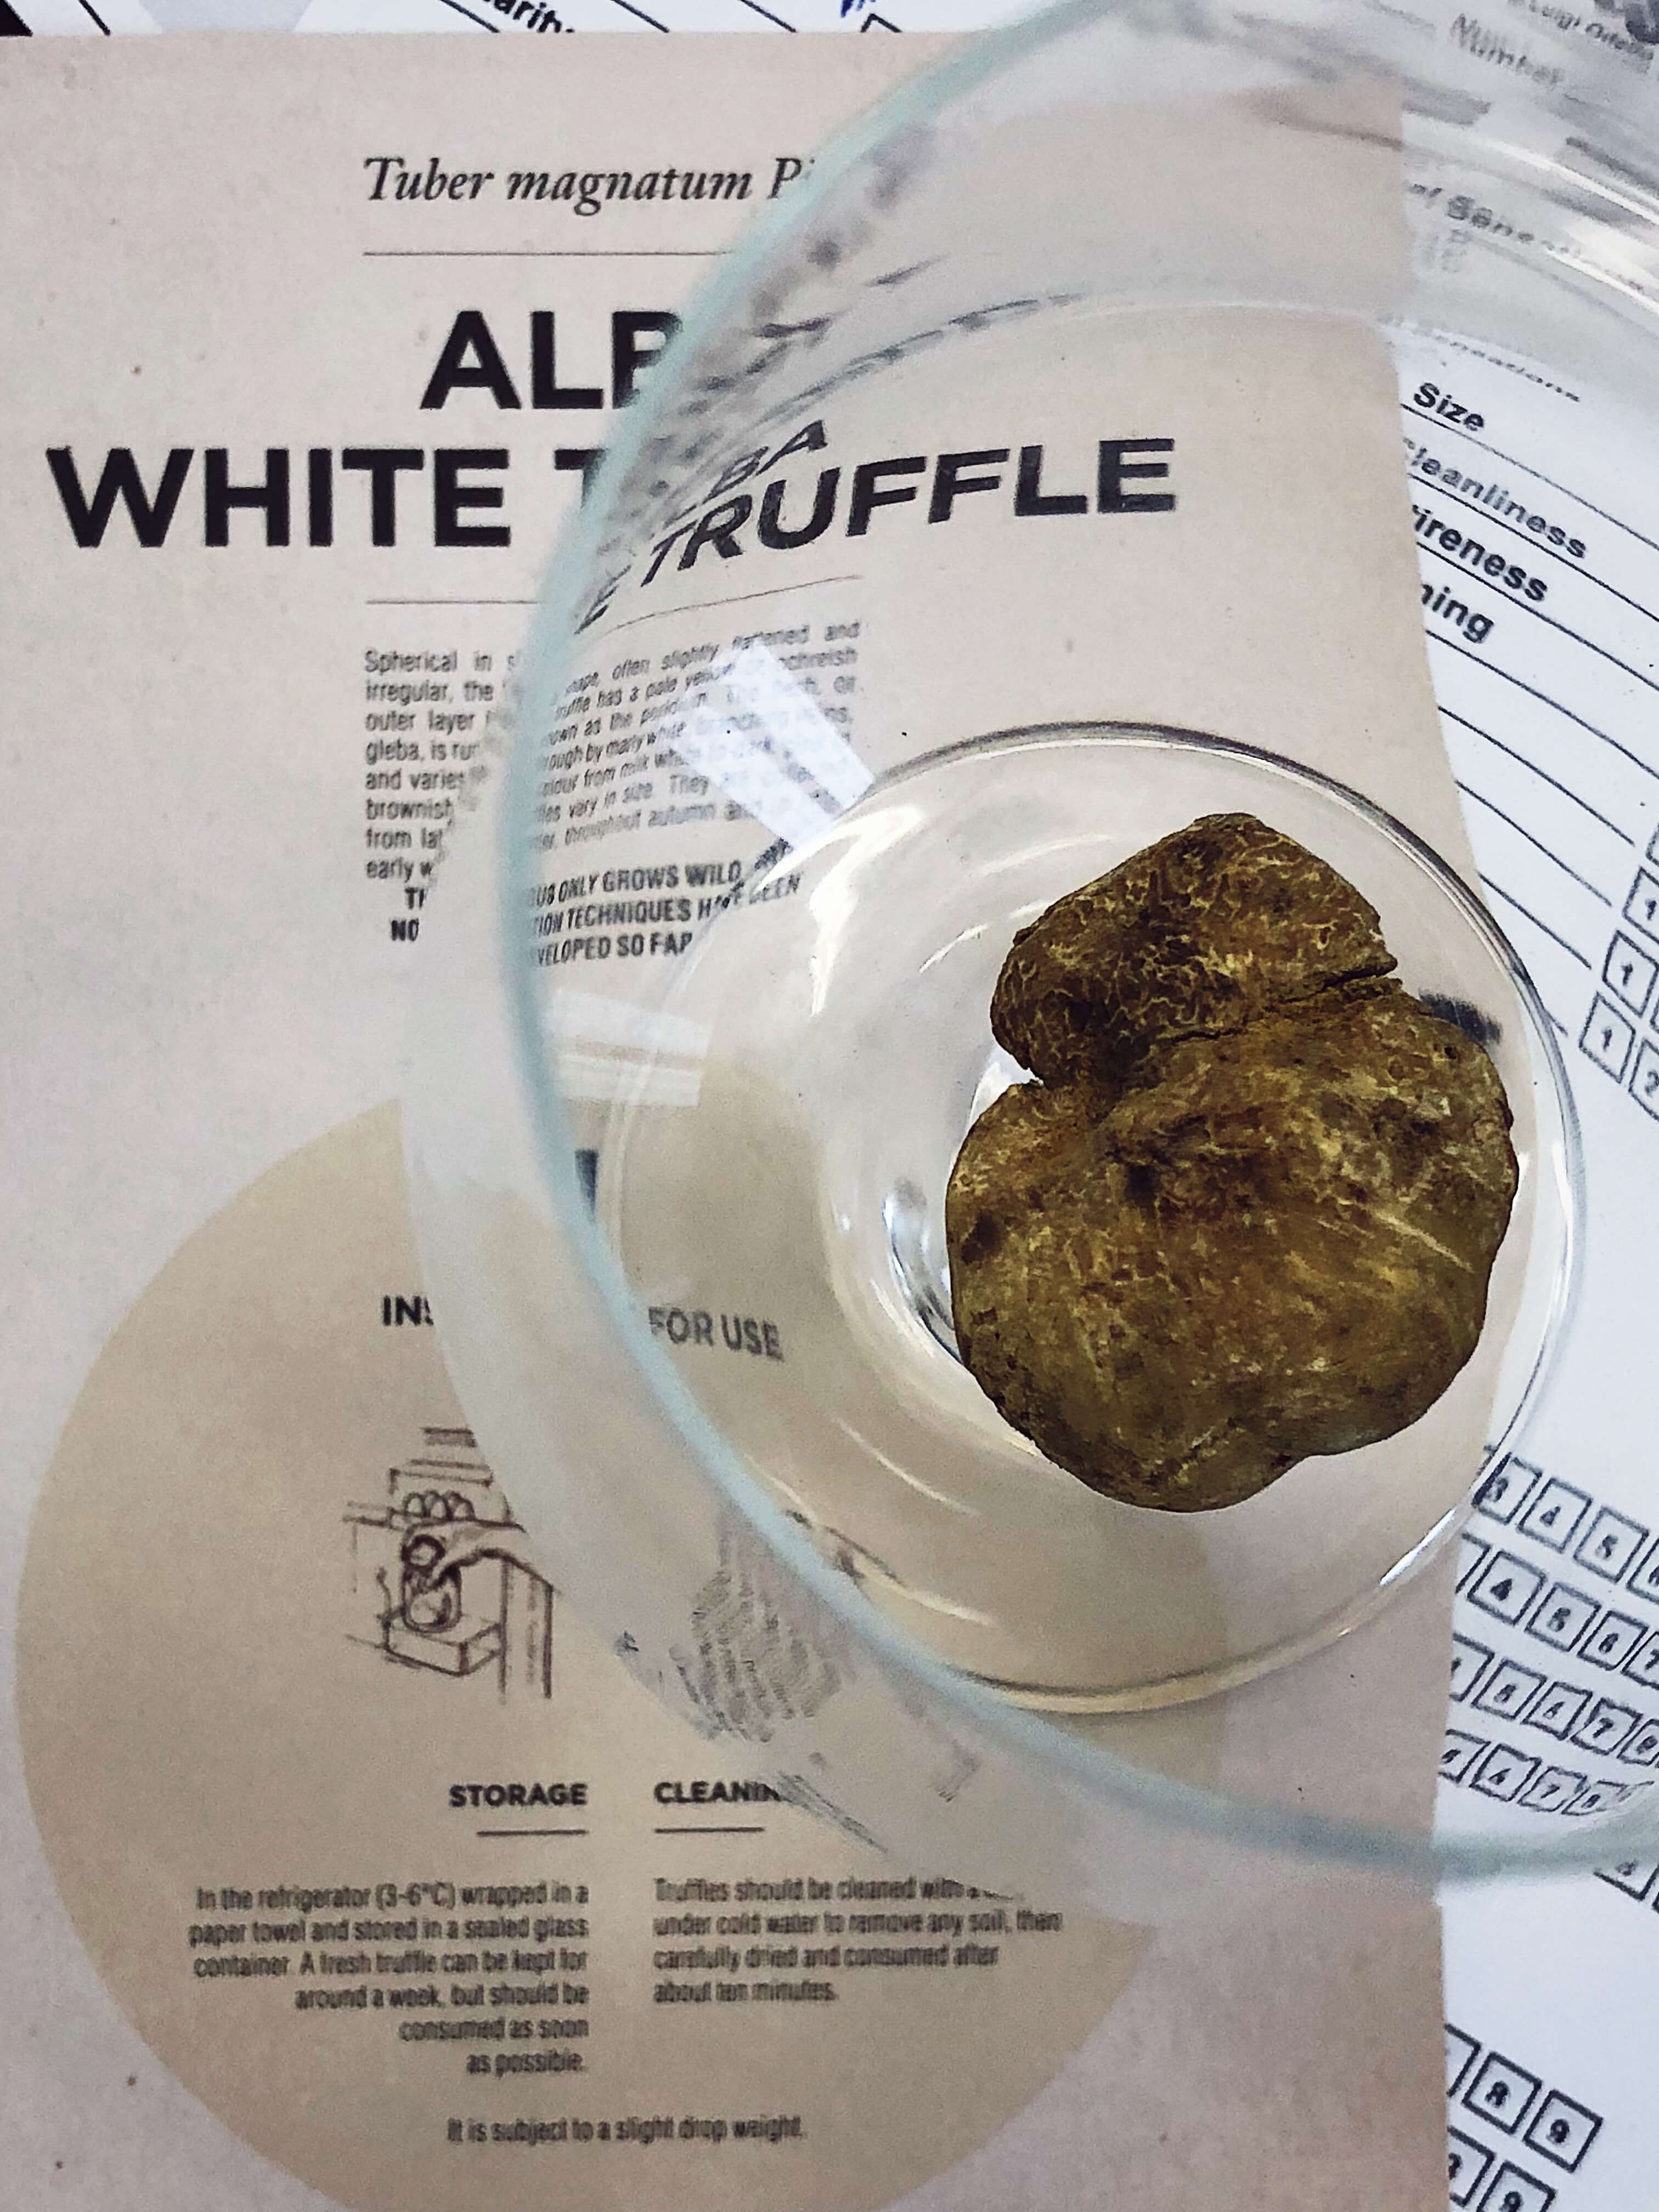 alba and langhe truffles